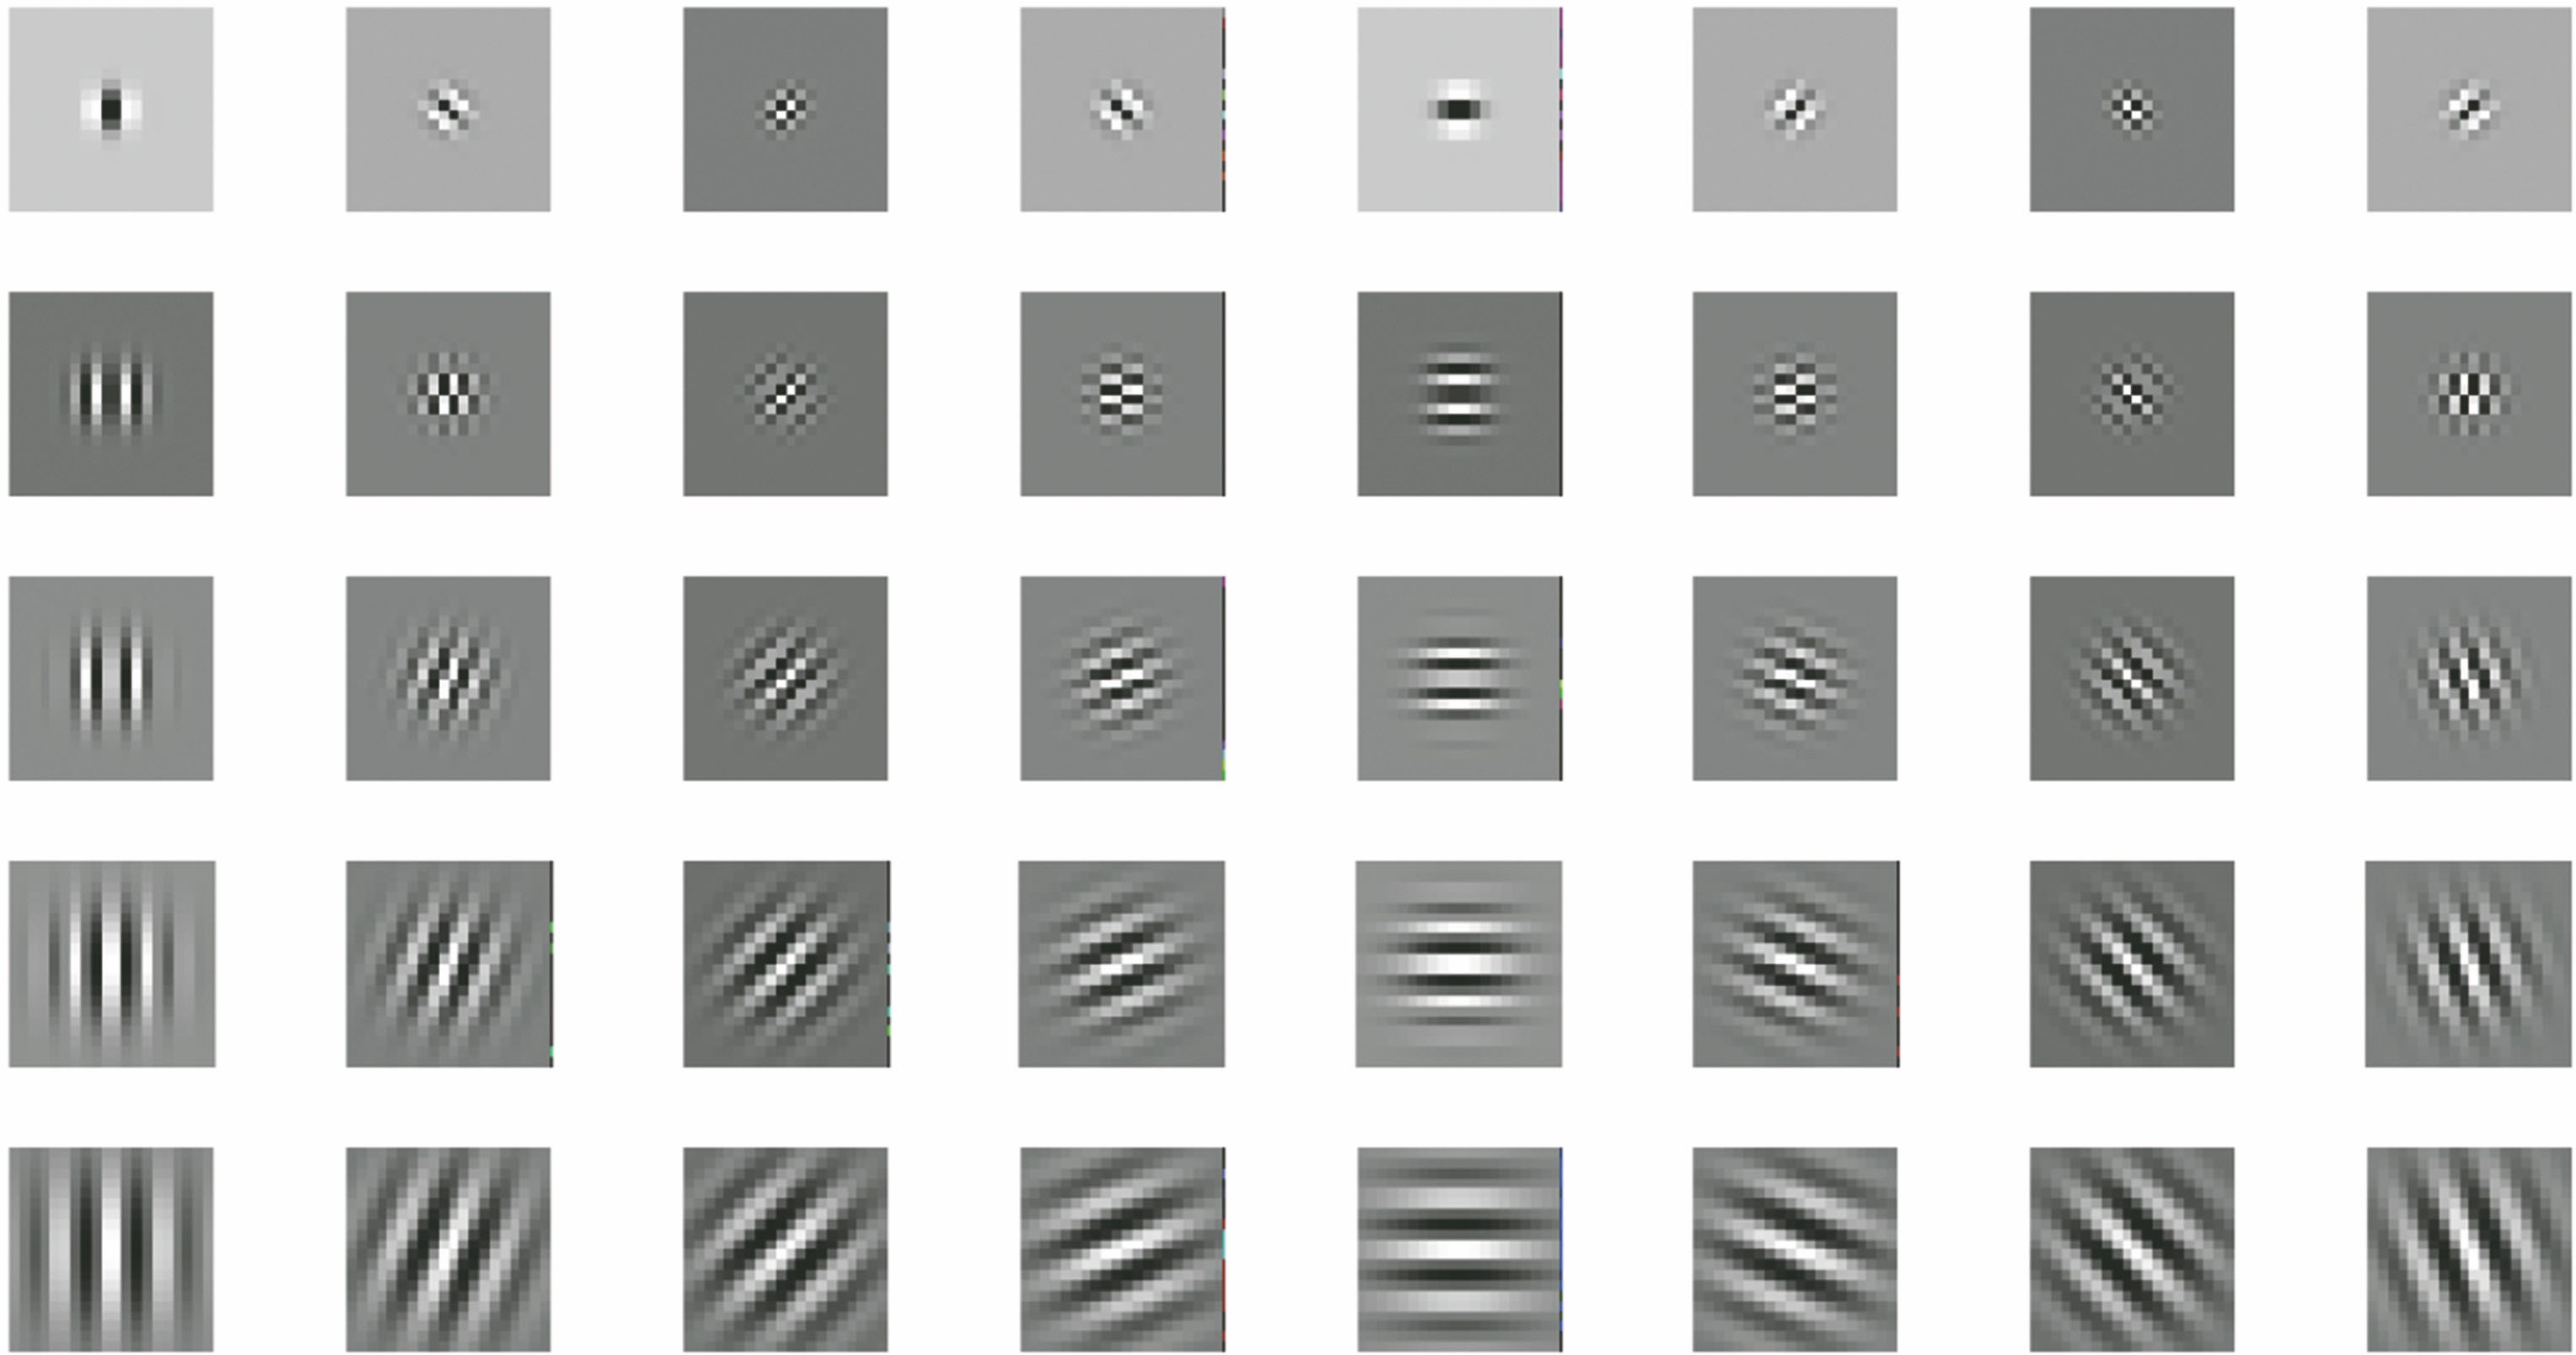 Schematic of Gabor filter